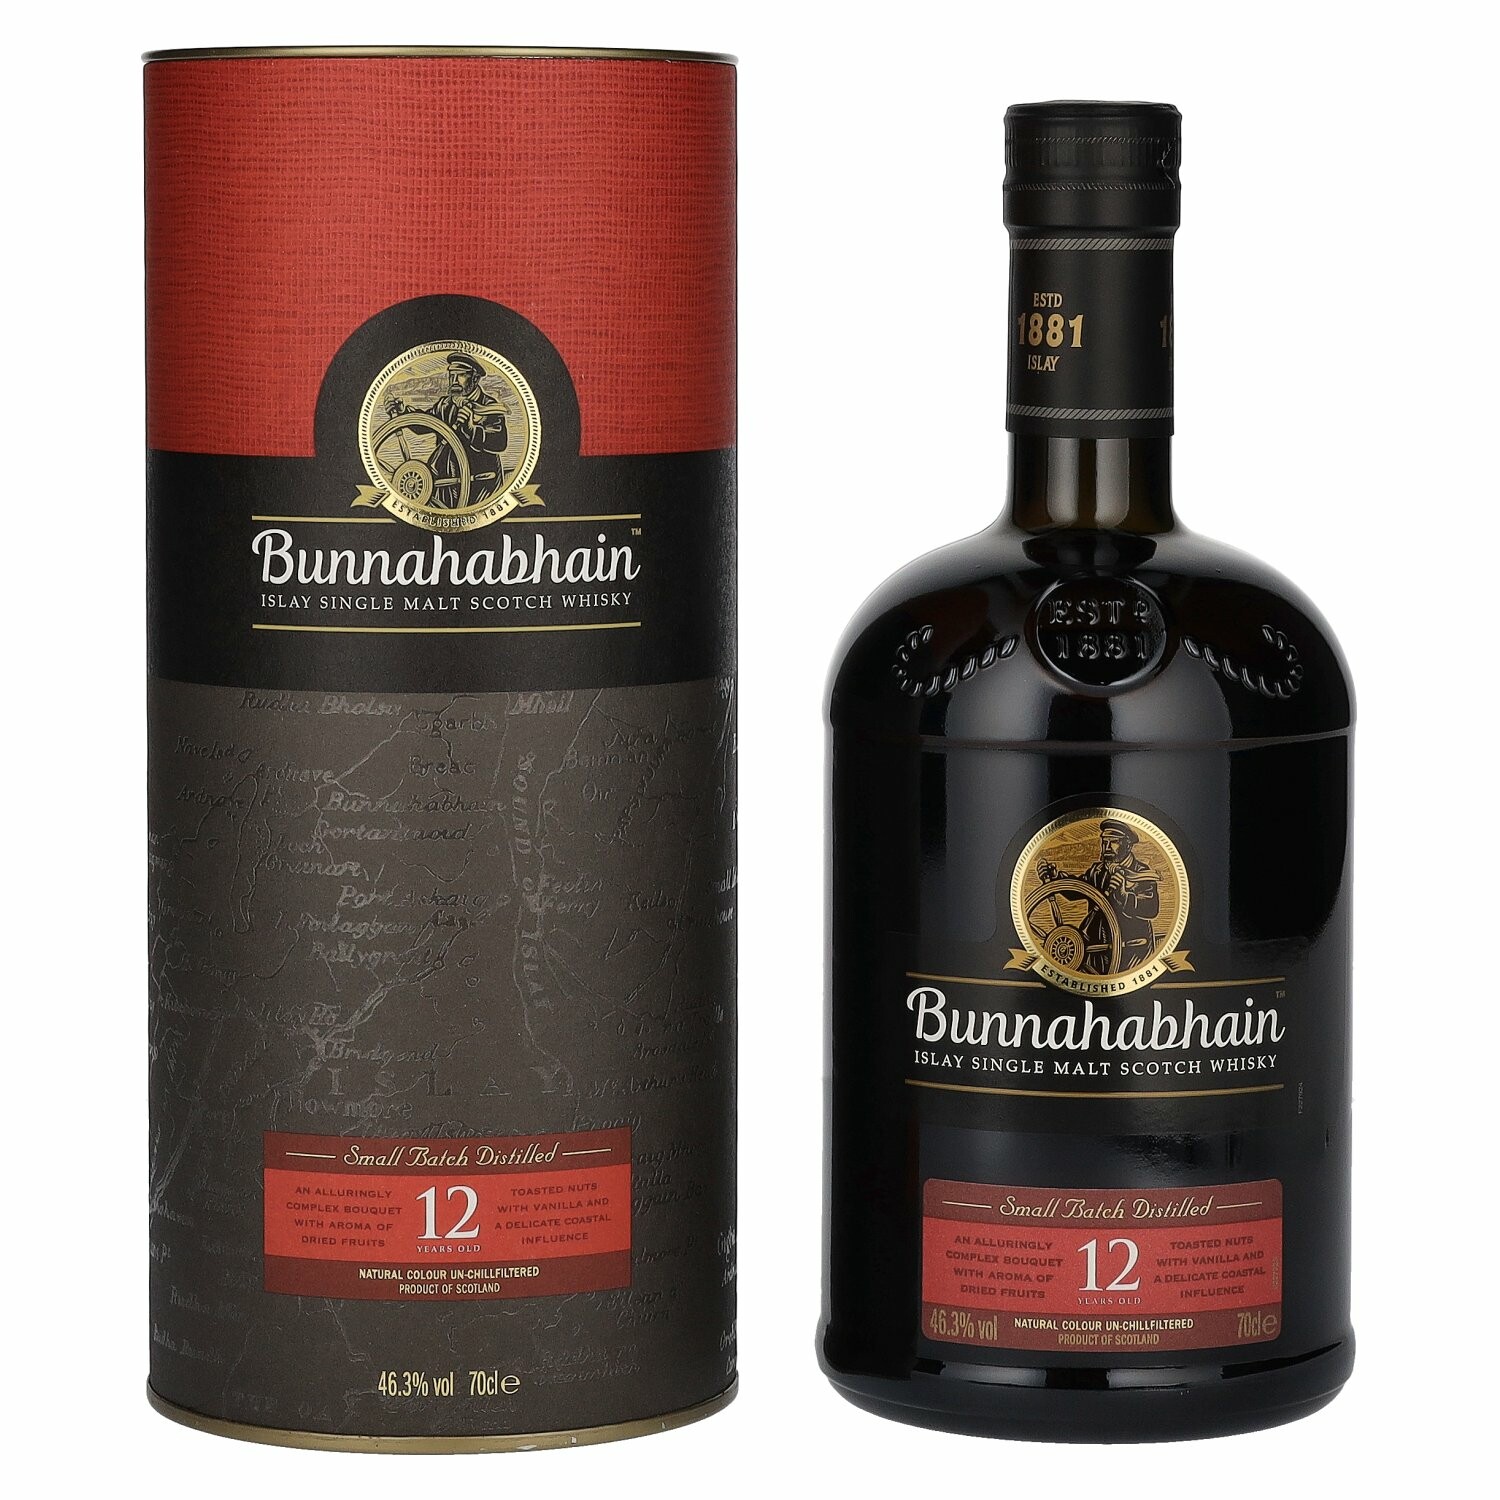 Bunnahabhain 12 Years Old Islay Single Malt Scotch Whisky 46,3% Vol. 0,7l in Giftbox